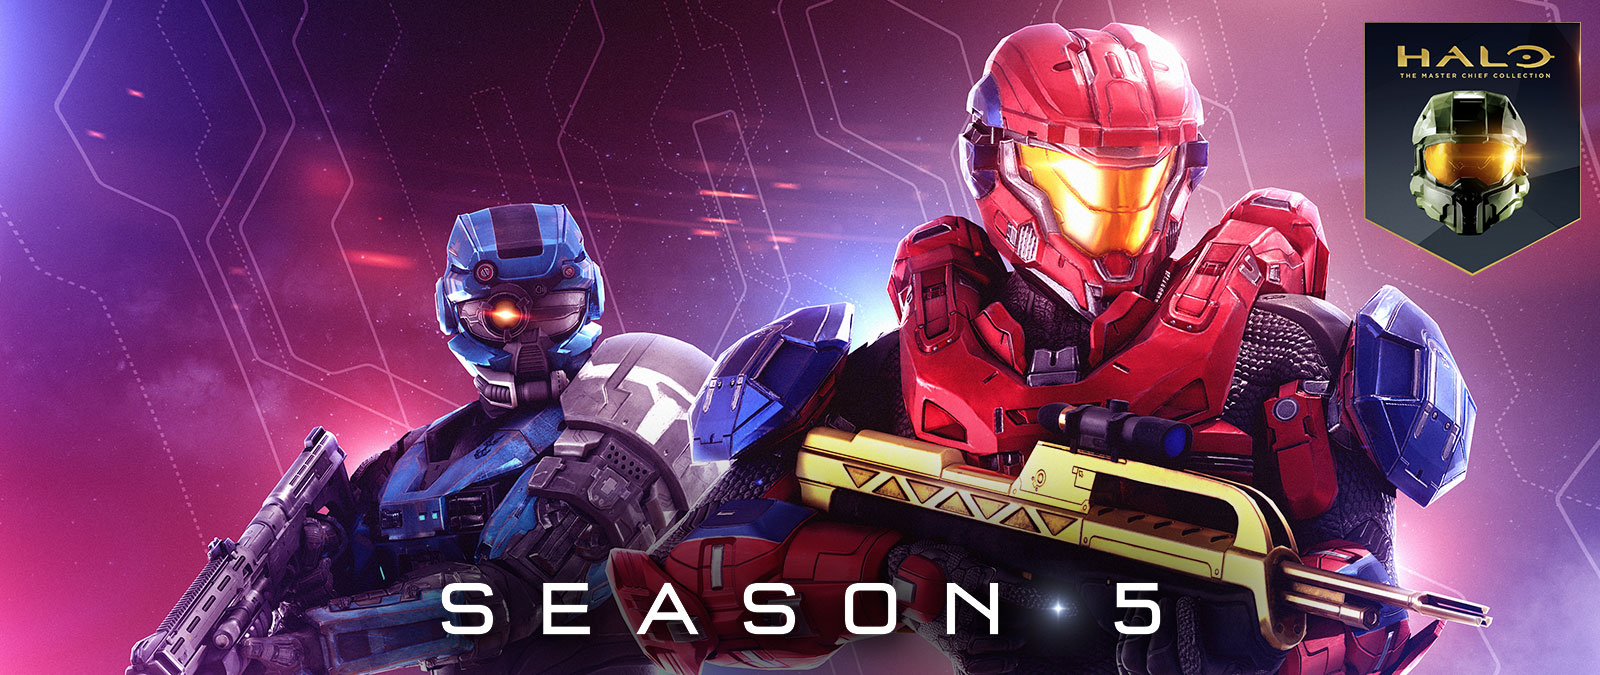 Halo: The Master Chief Collection，賽季 5，紅色的斯巴達人拿著金色的戰鬥步槍，而藍色的斯巴達人戴著只有一隻眼睛的特殊頭盔